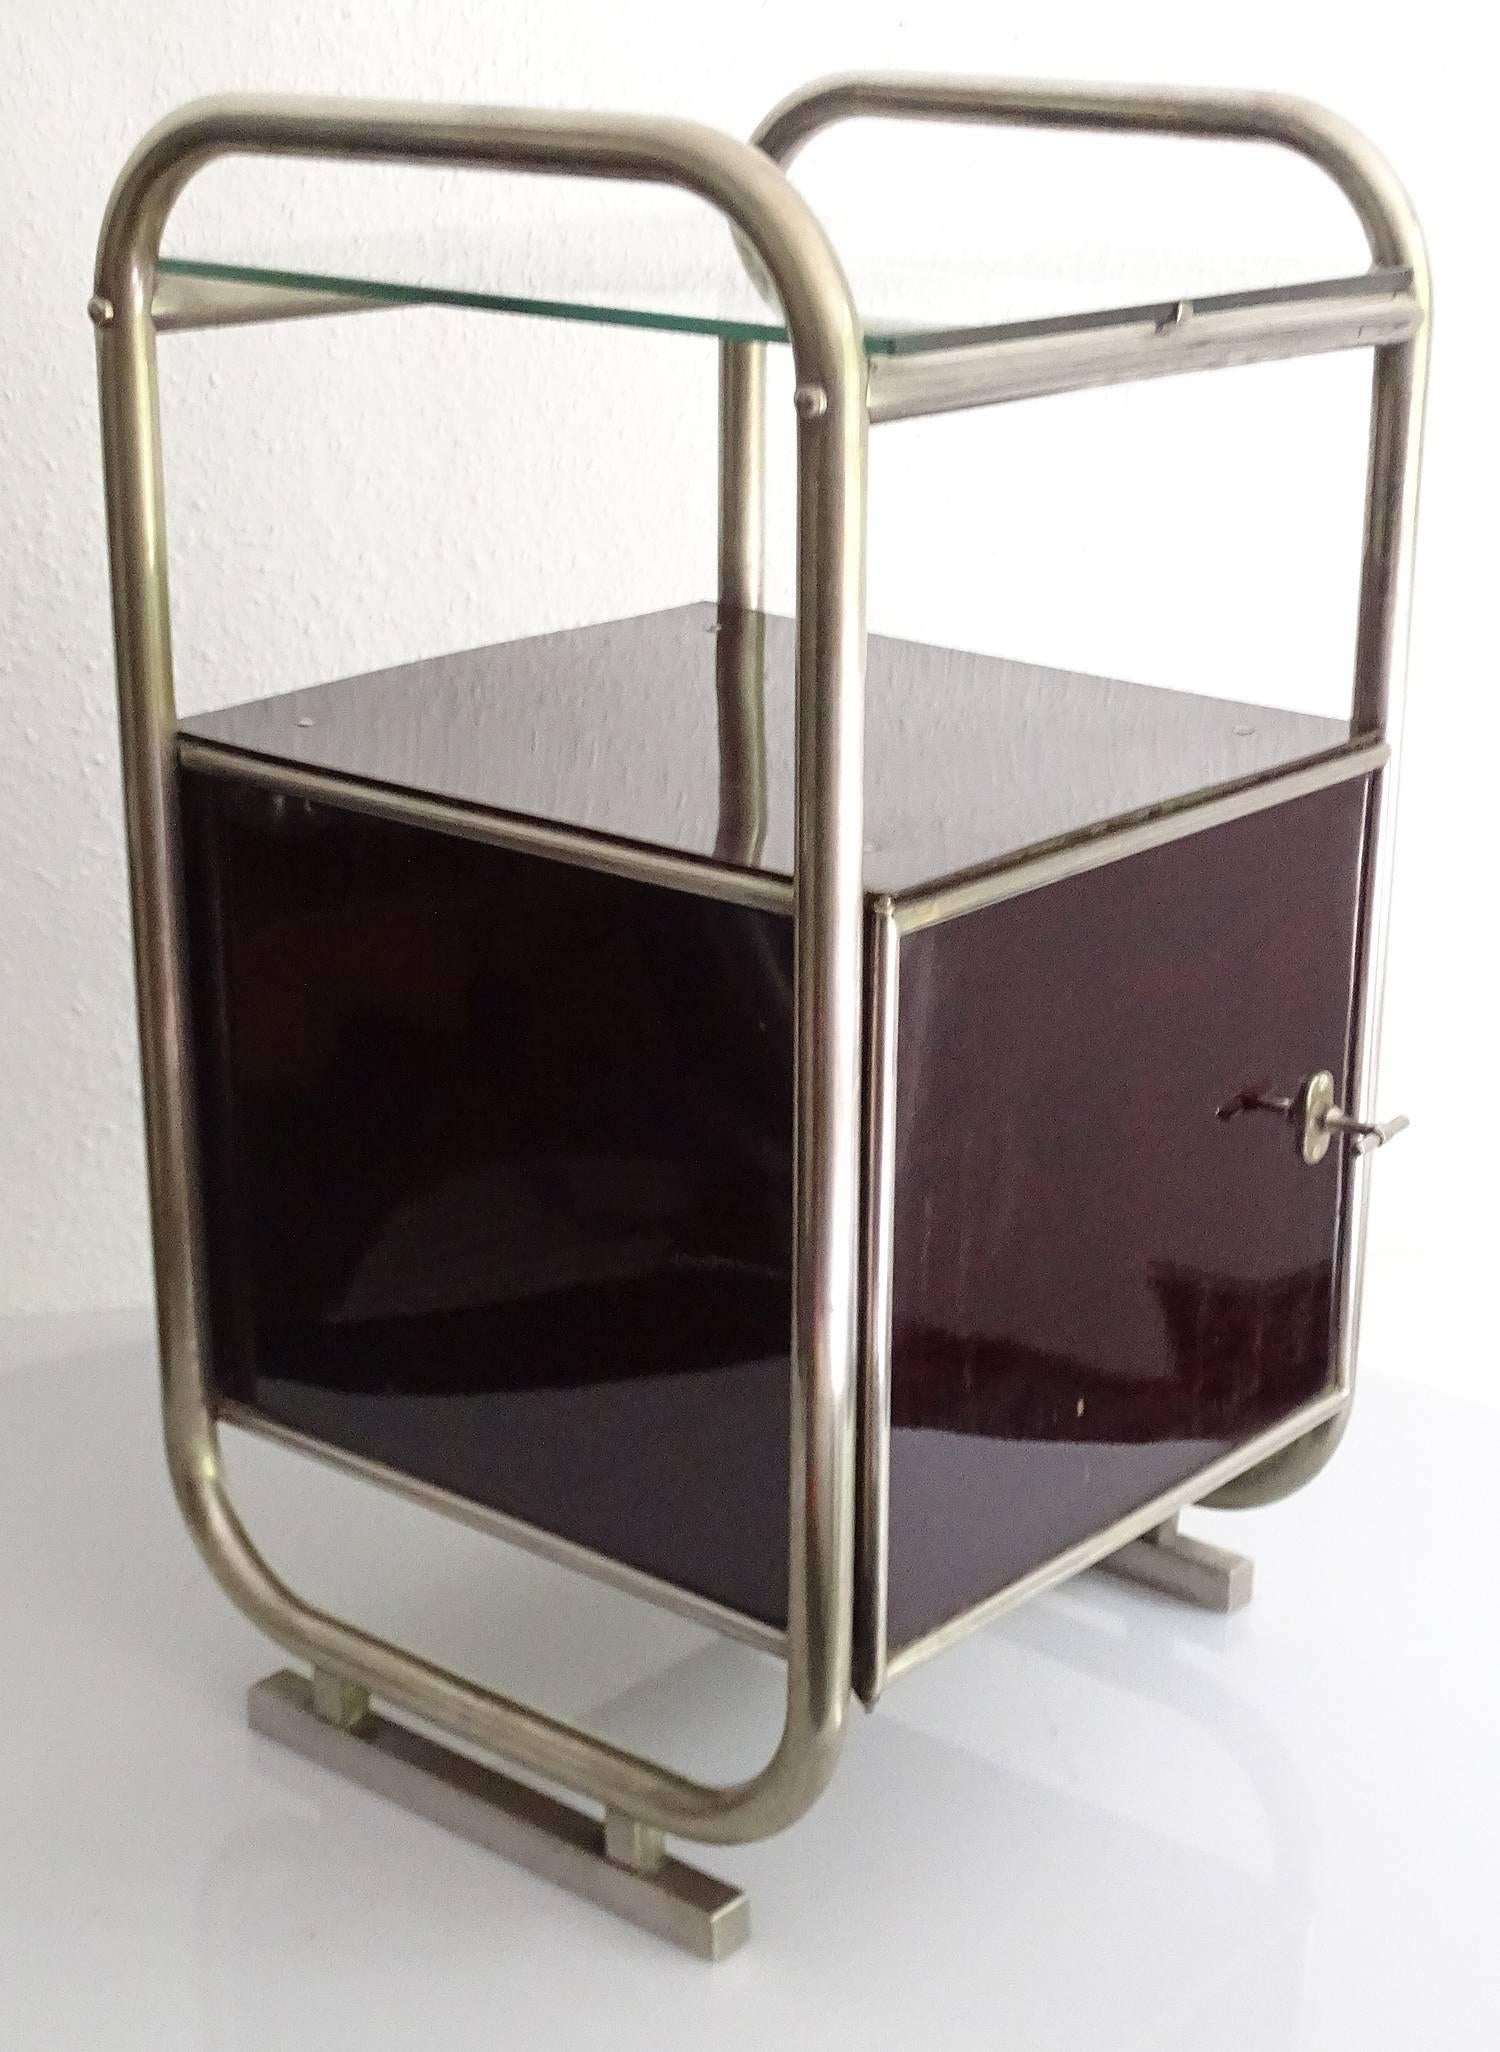 German Pair of Bauhaus Art Deco Industrial Side Tables Cabinets, 1930s Modernist Design